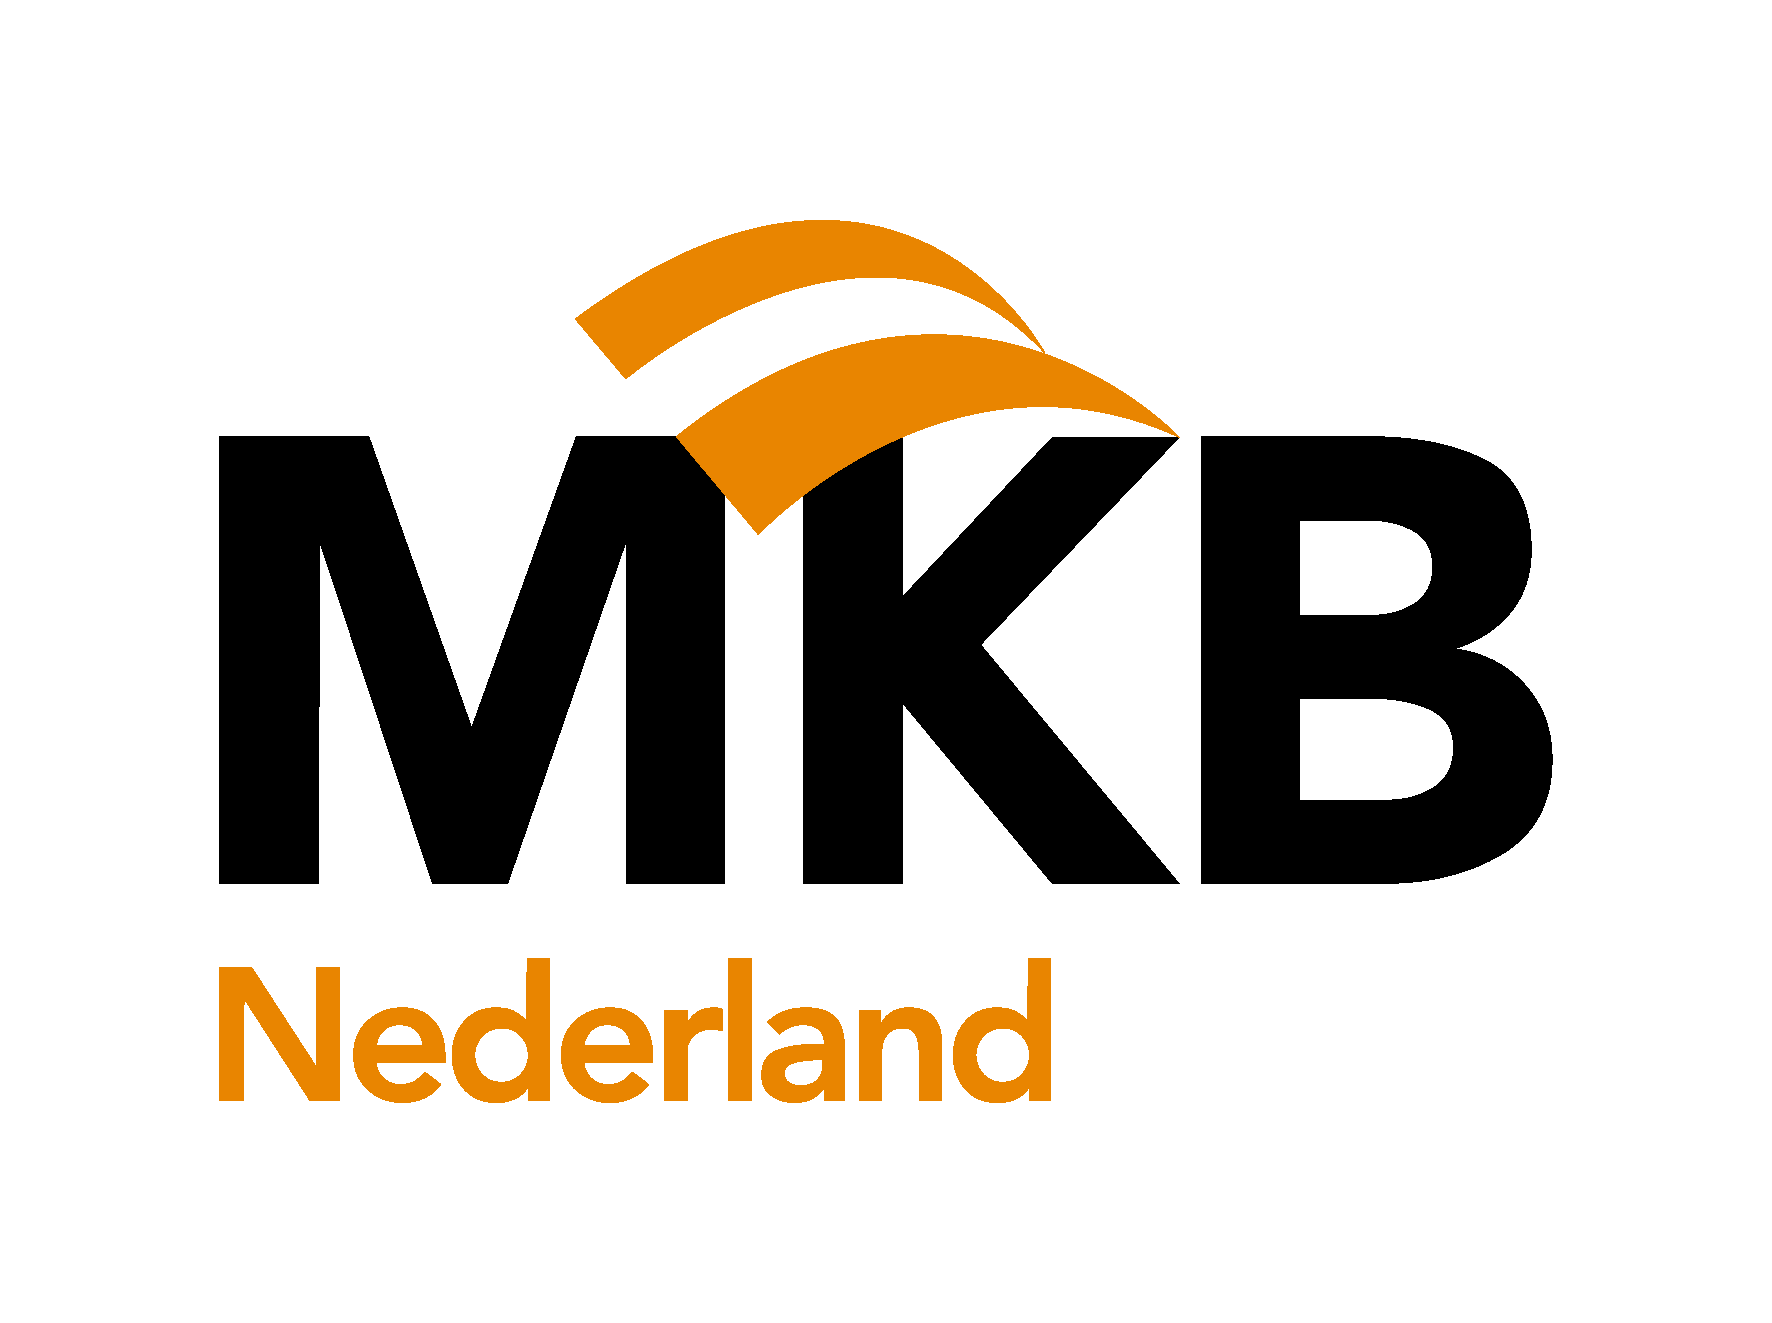 MKB-Nederland